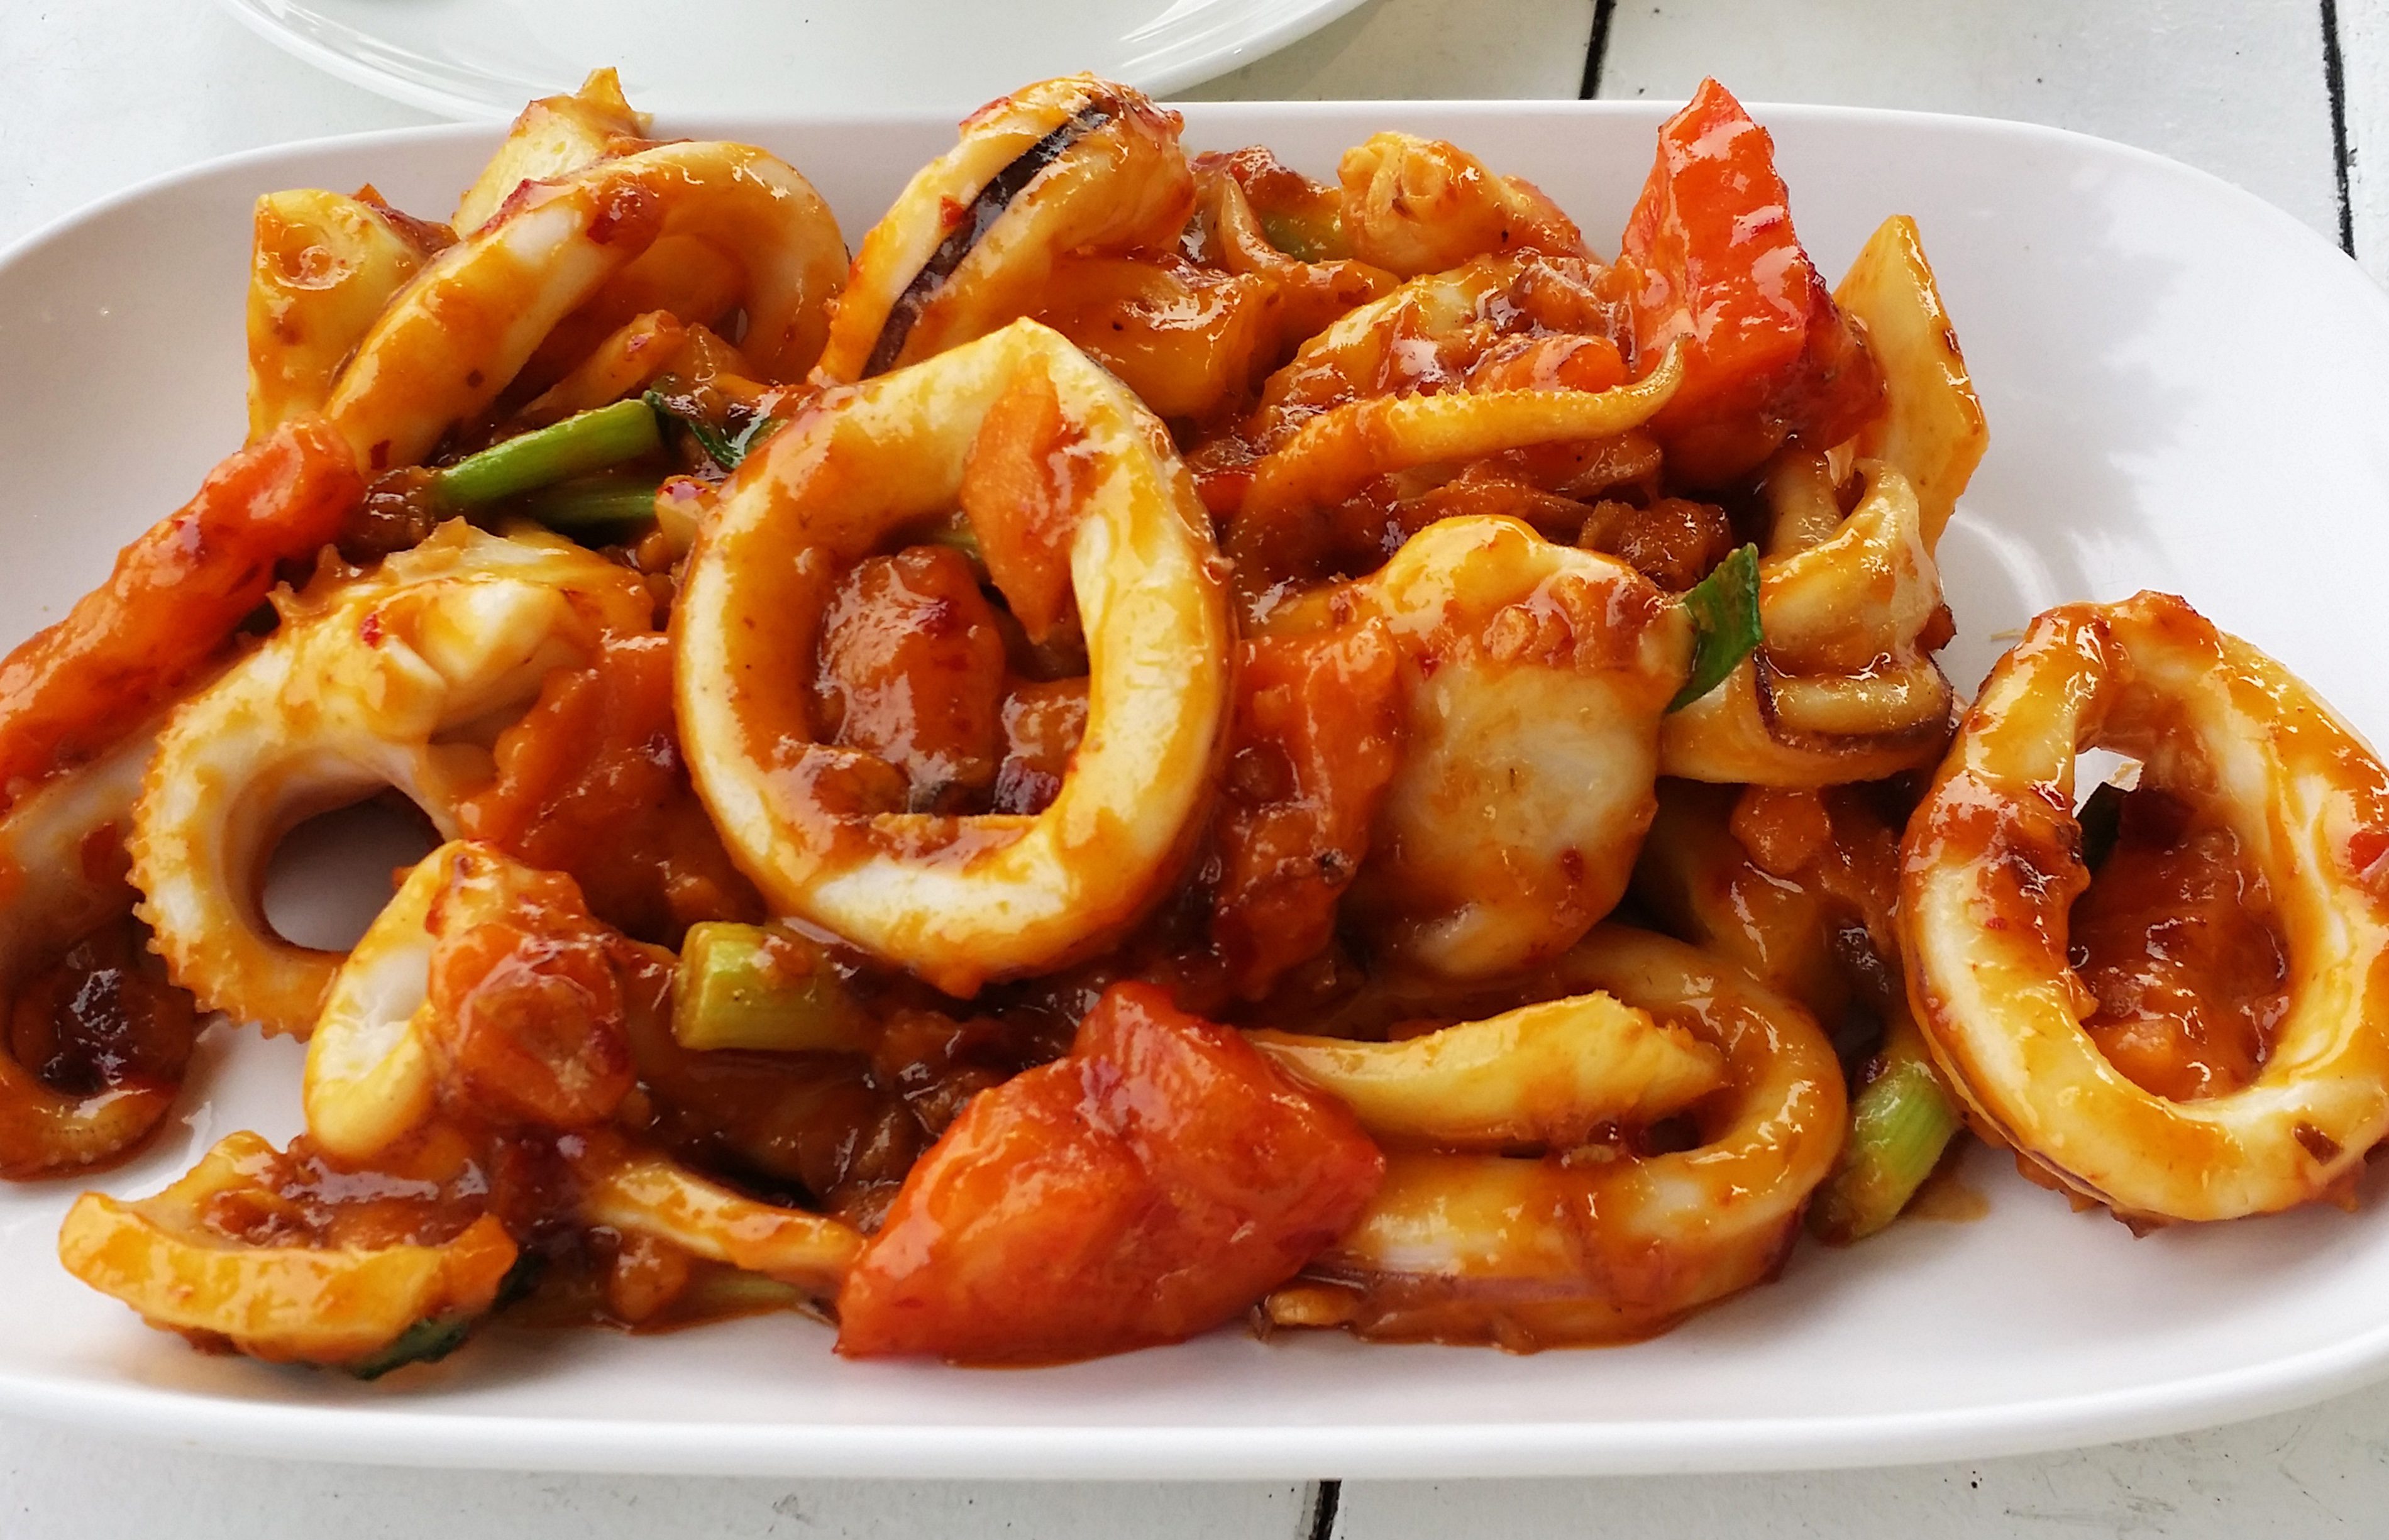 Calamares en salsa americana - Bekia Cocina